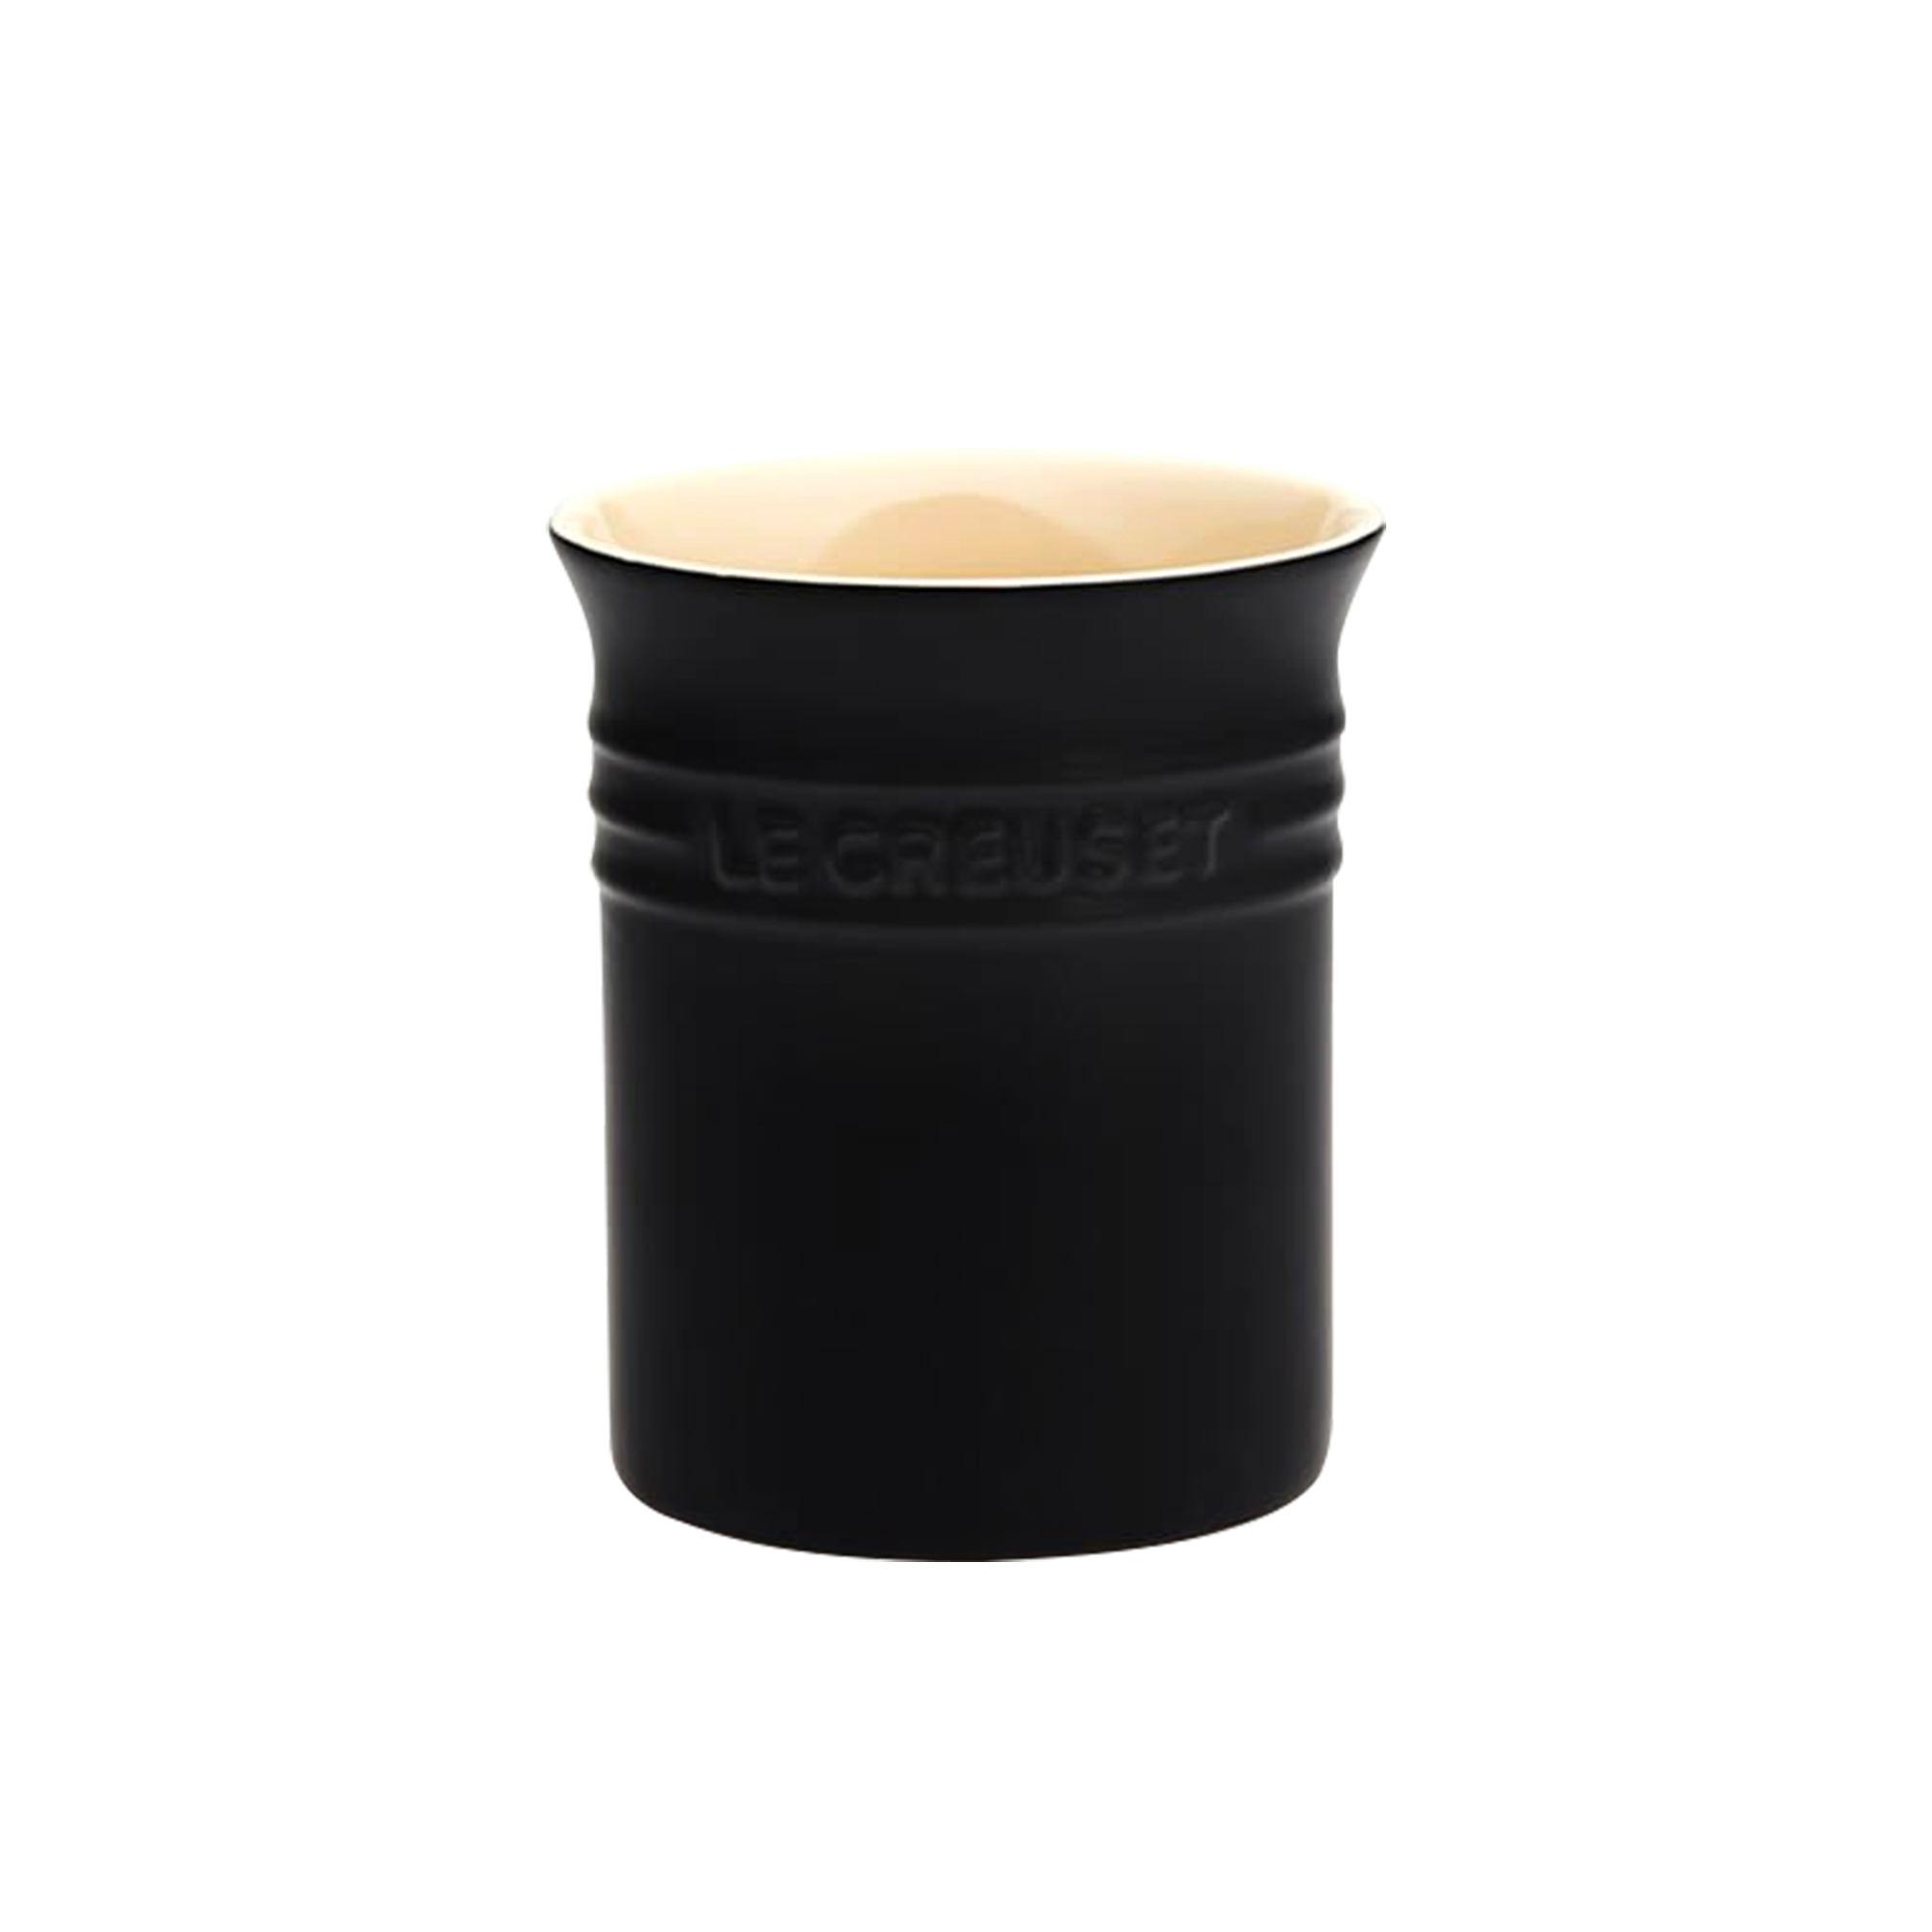 Le Creuset Stoneware Utensil Jar Small Satin Black Image 1